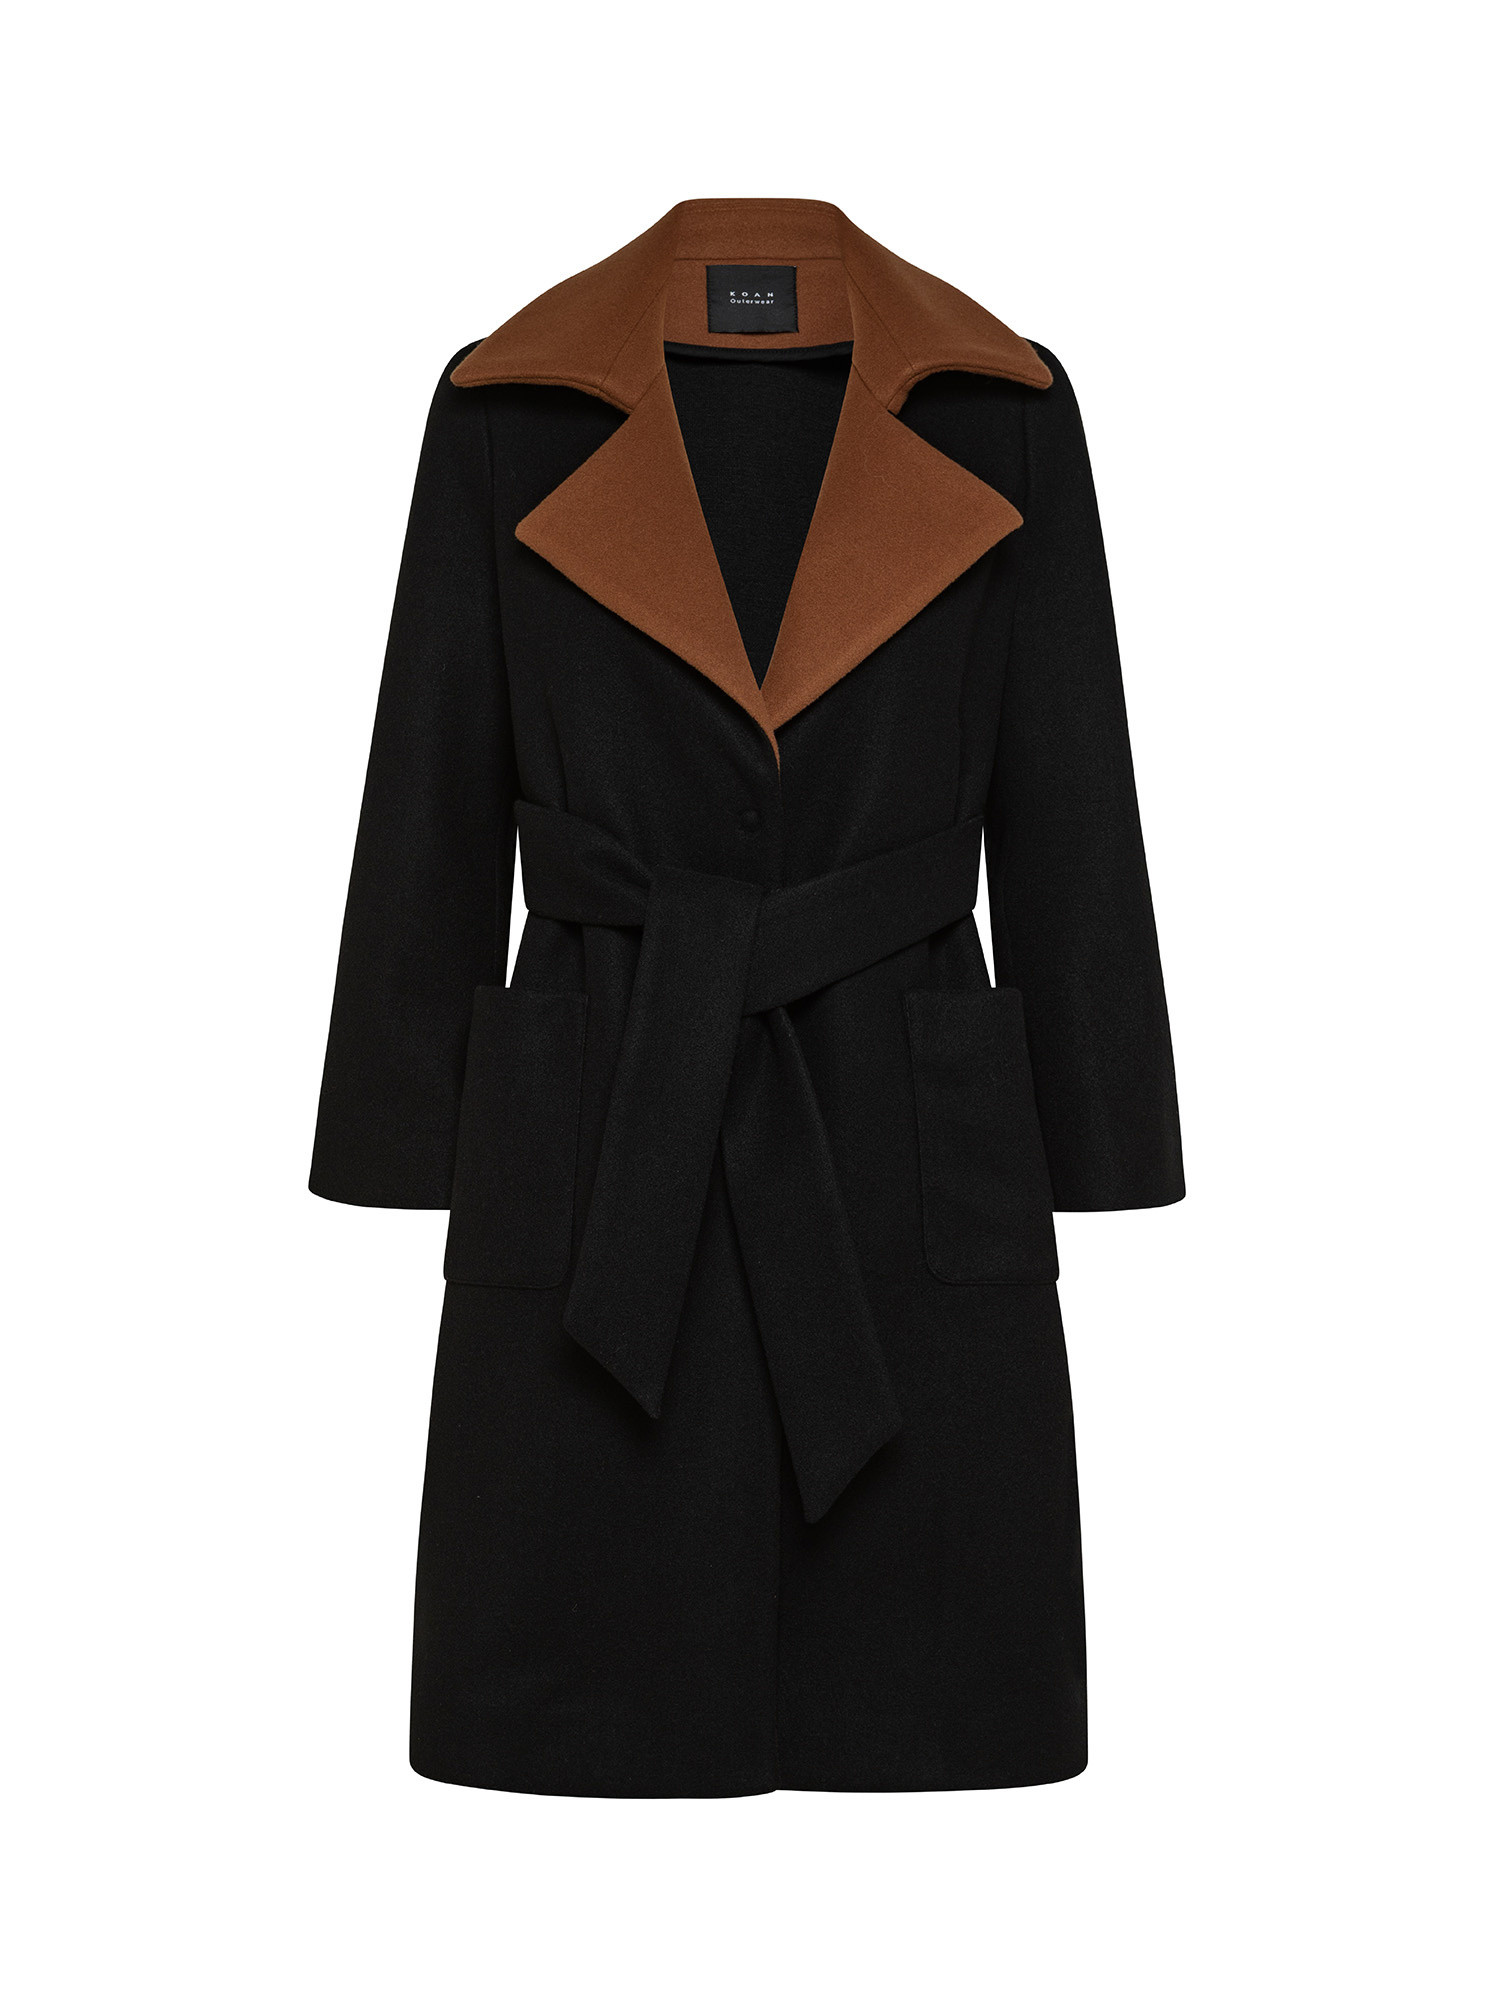 Koan - Two-tone coat with belt, Black, large image number 0